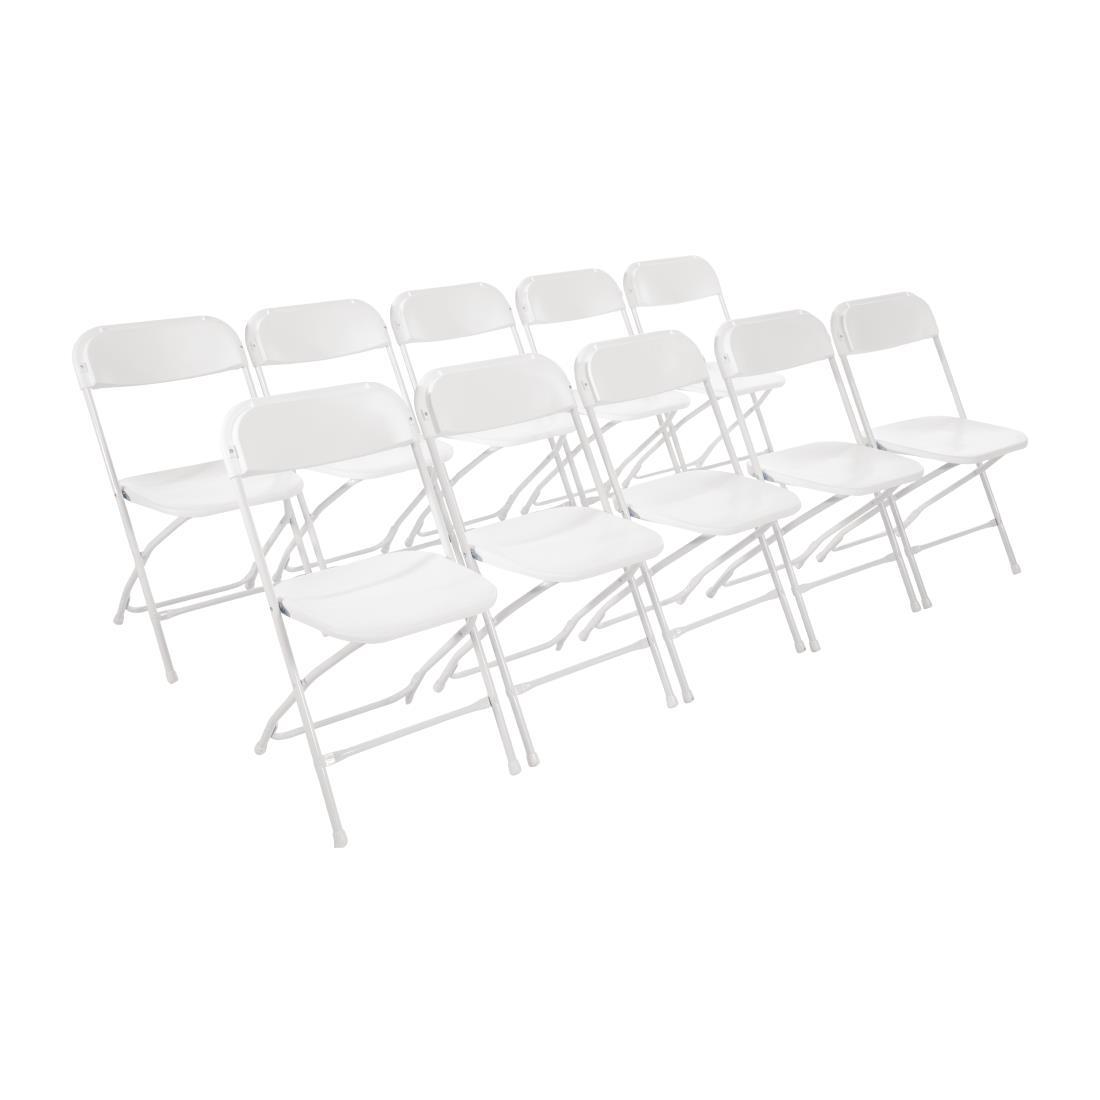 Bolero PP Folding Chairs White (Pack of 10) - GD387  - 1